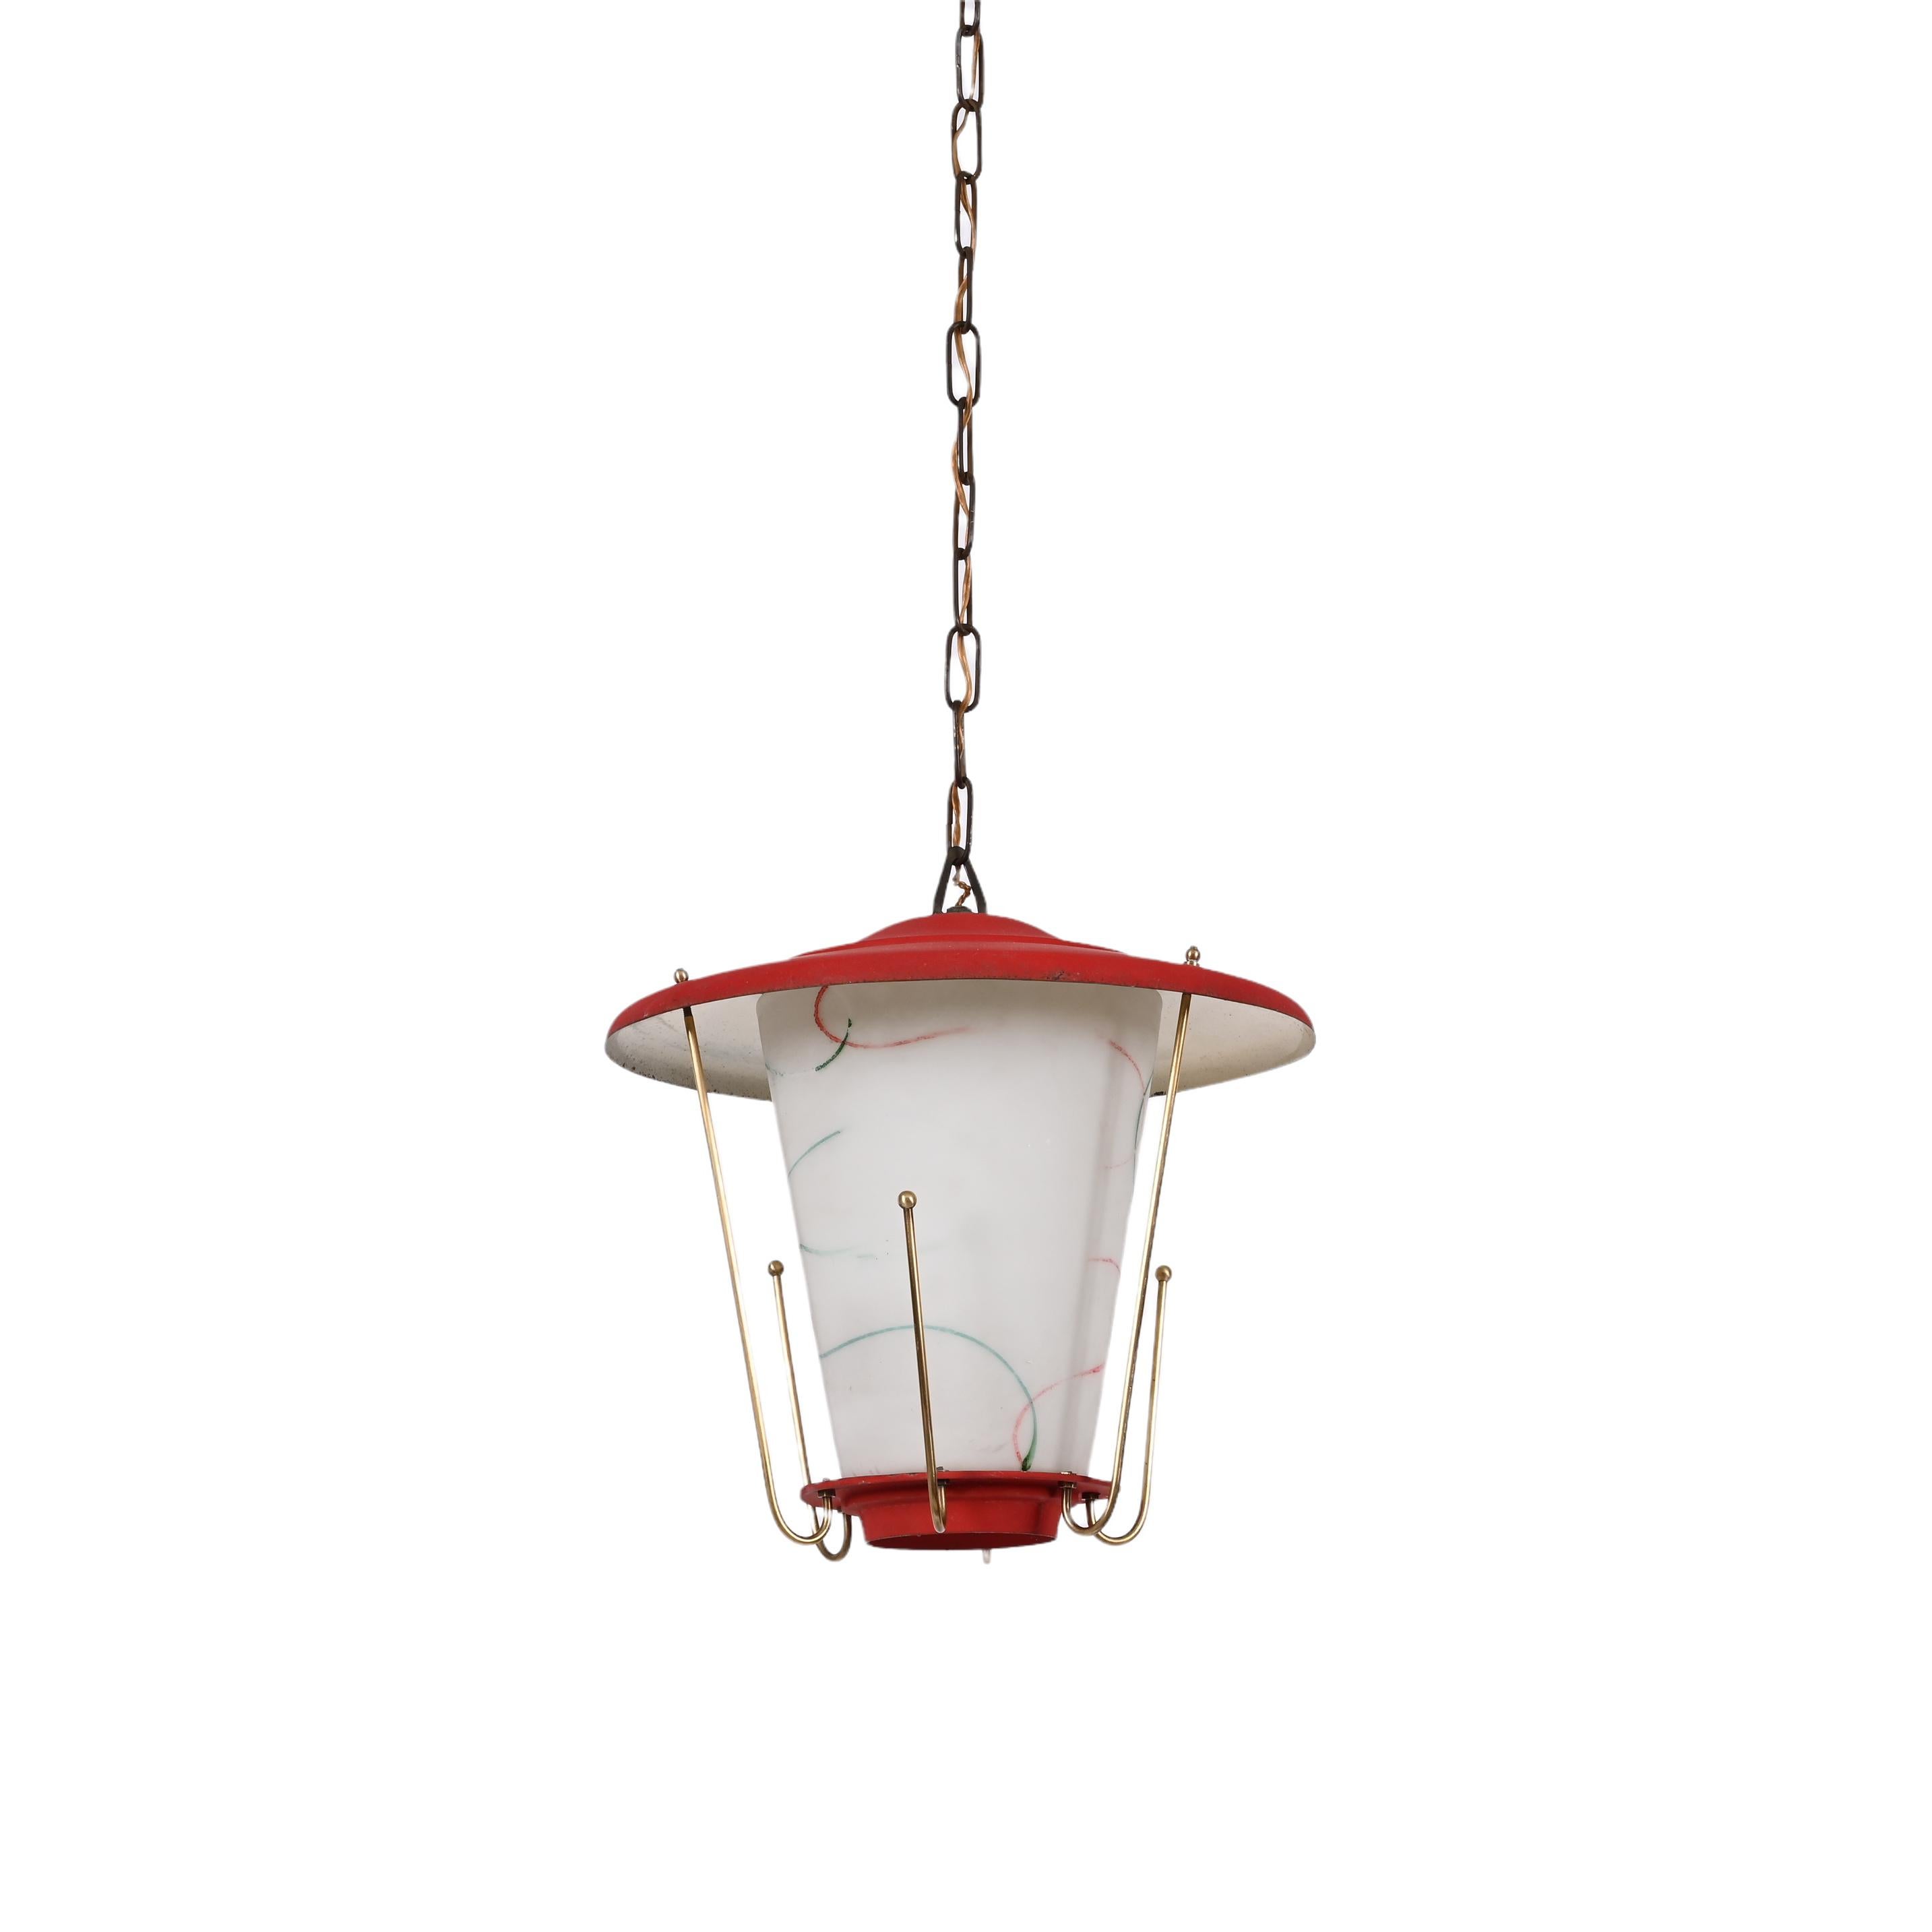 Metal Midcentury Round Opaline Glass and Brass Italian Red Lantern Chandelier, 1950s For Sale